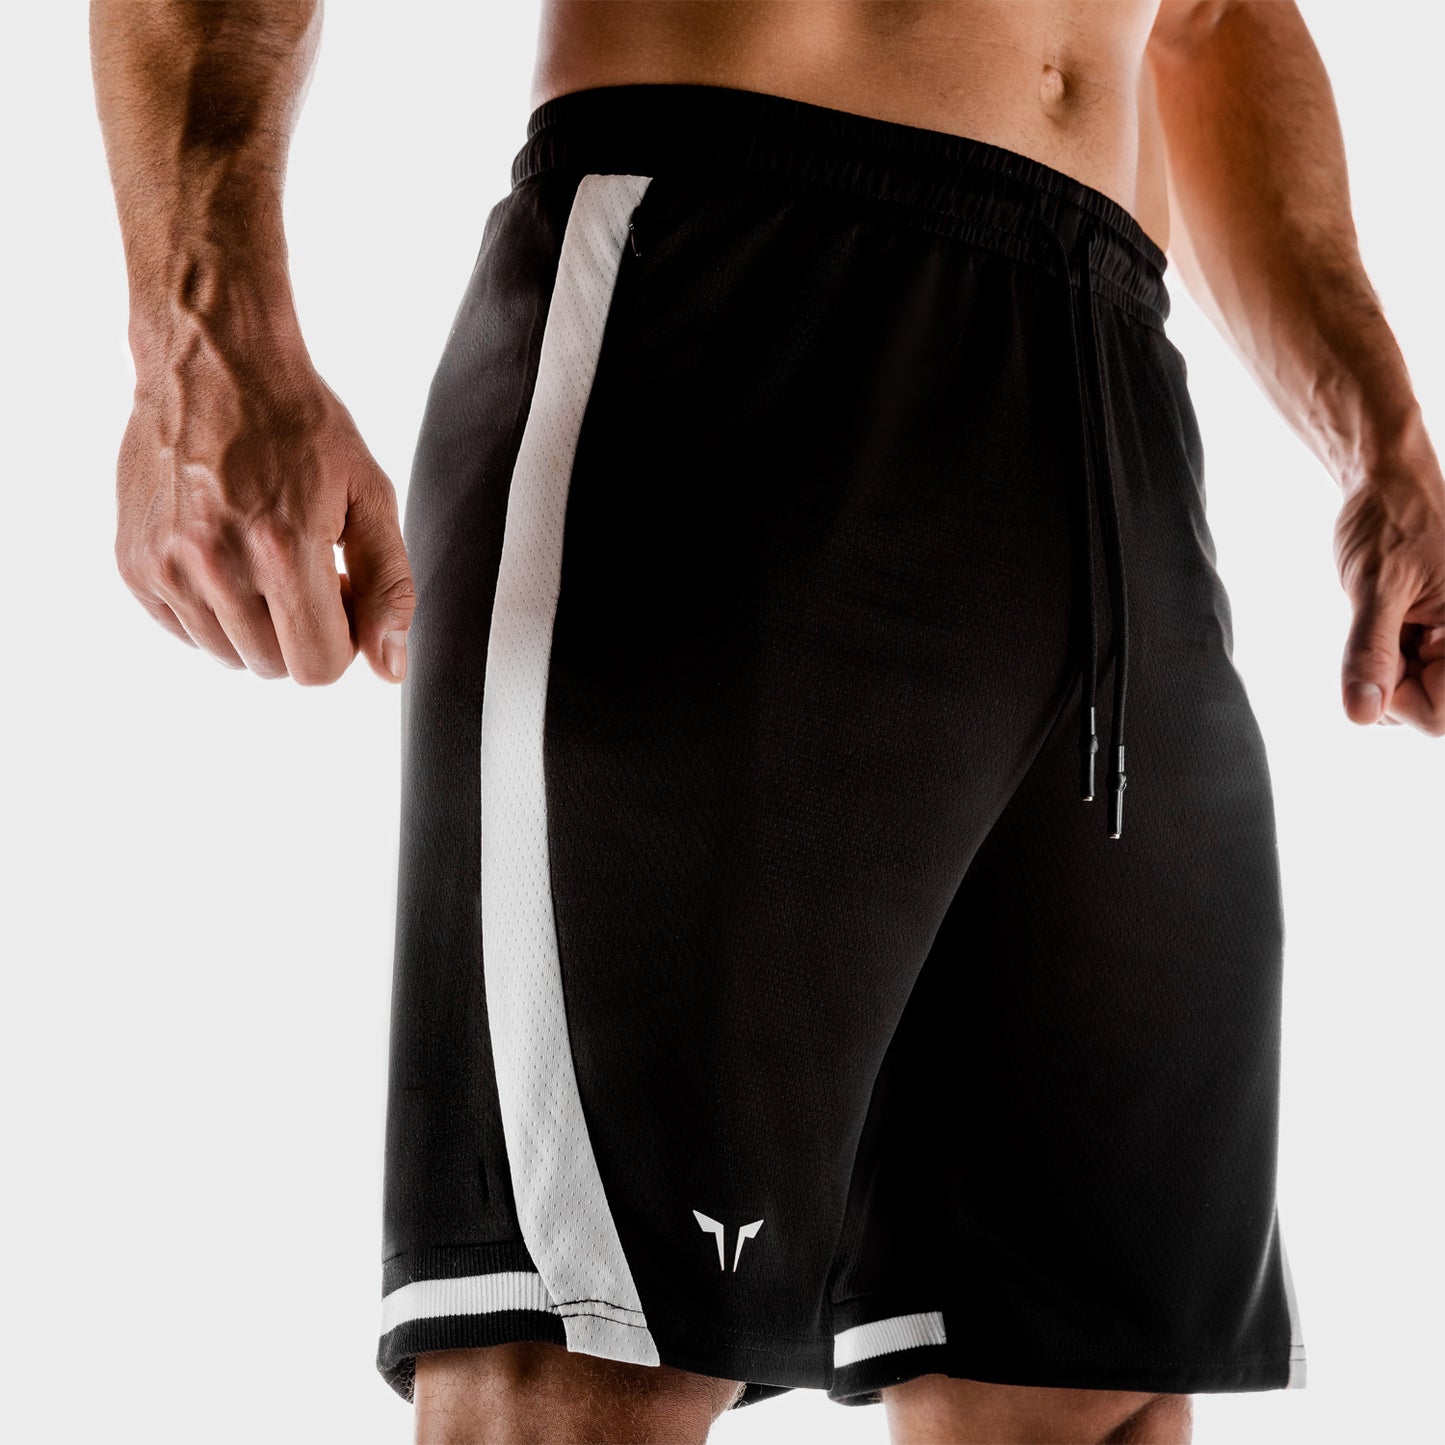 squatwolf-workout-short-for-men-hybrid-2-0-basketball-shorts-black-gym-wear